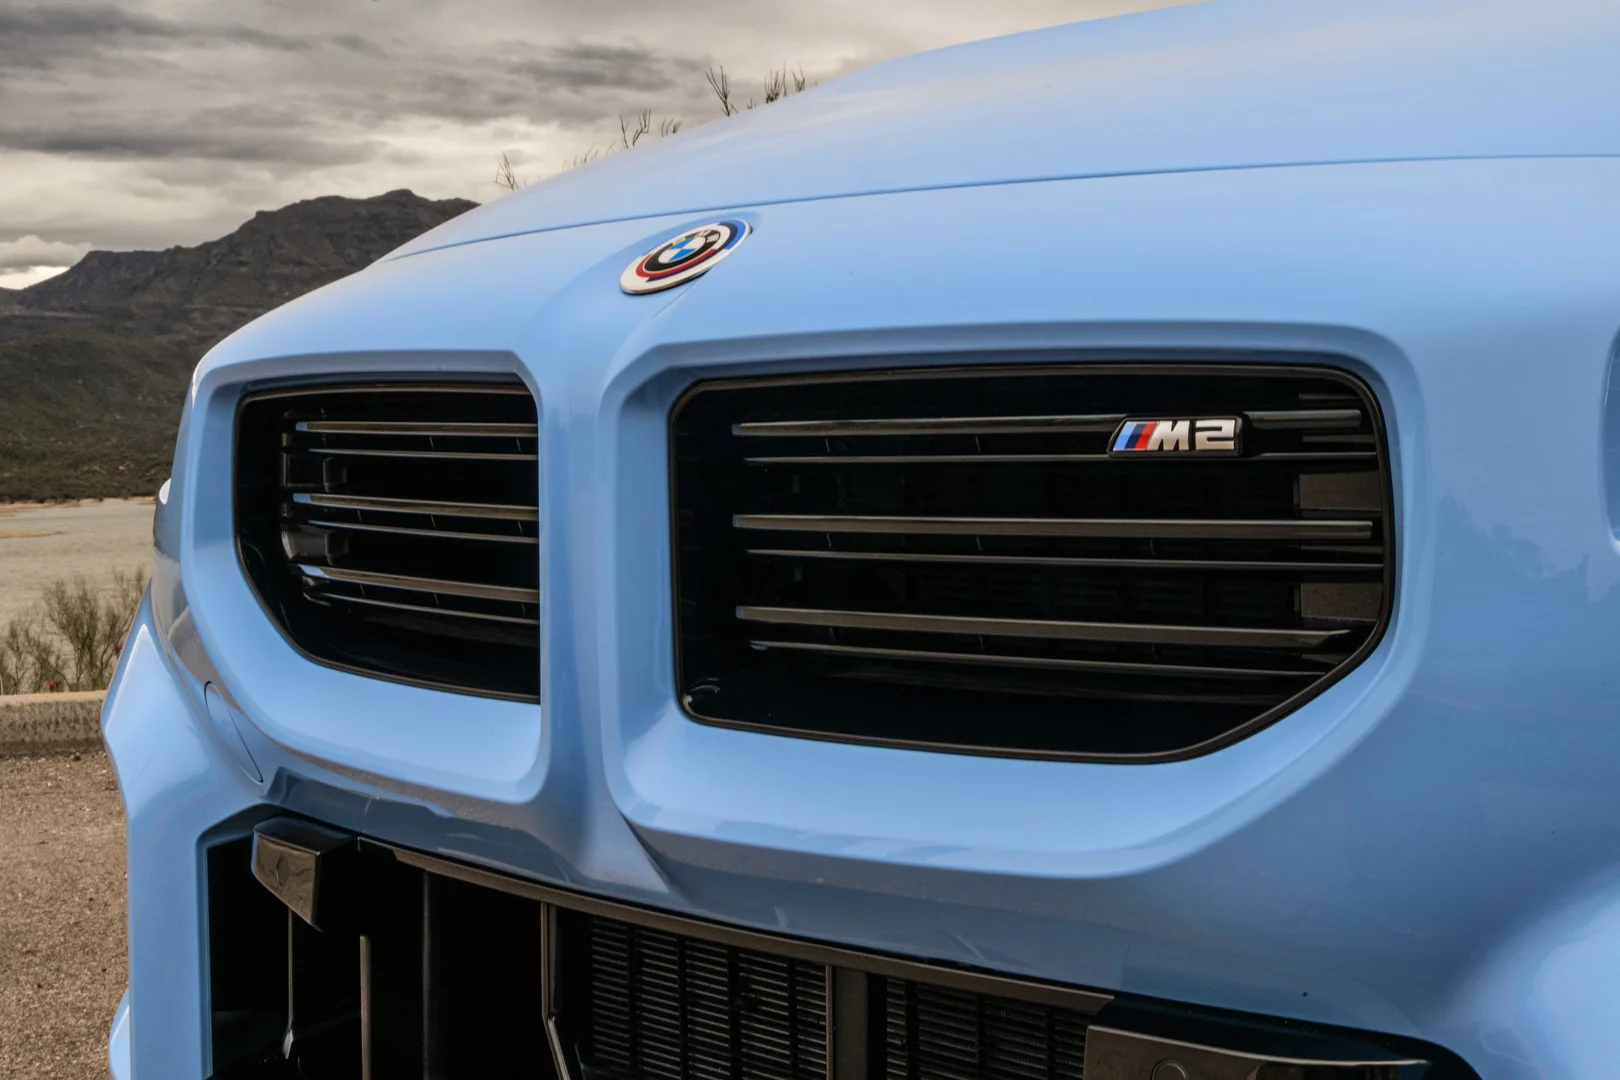 Essai auto BMW M2 : le cadeau (d'adieu ?)